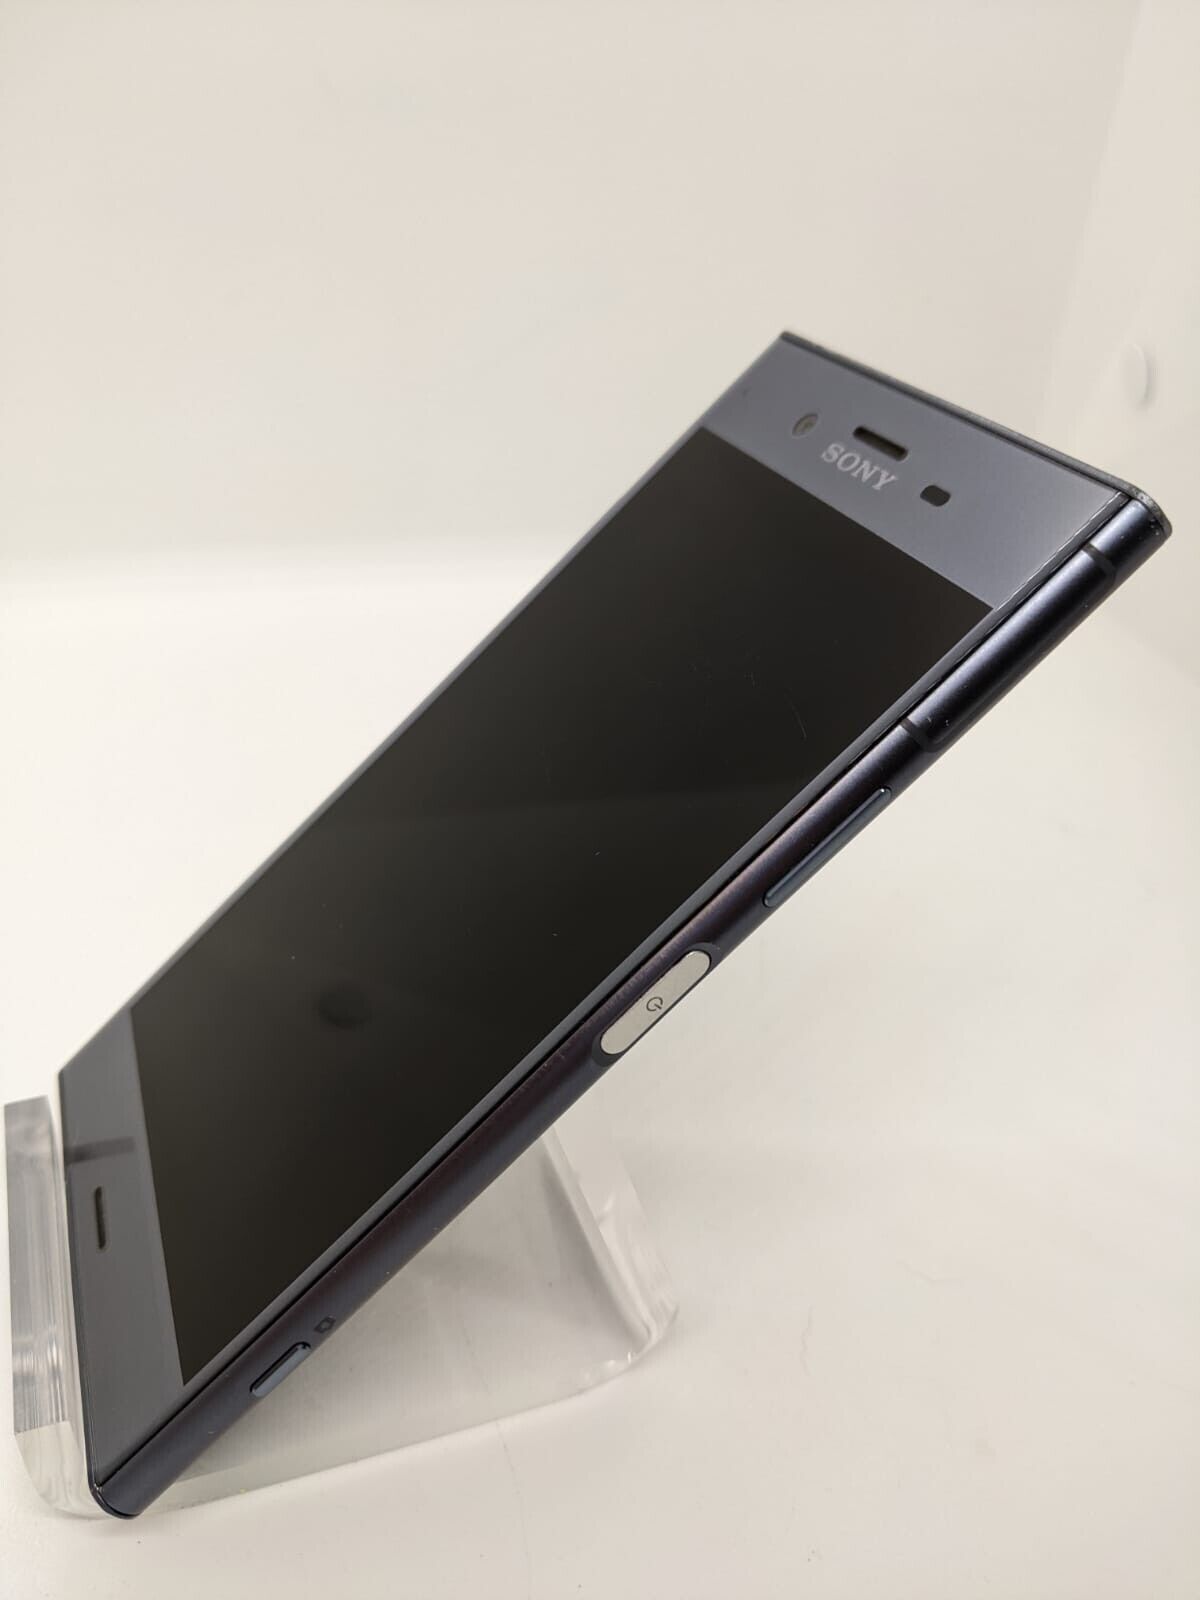 Sony Xperia XZ1 64GB Dual Sim Factory Unlocked Blue Smartphone G8342